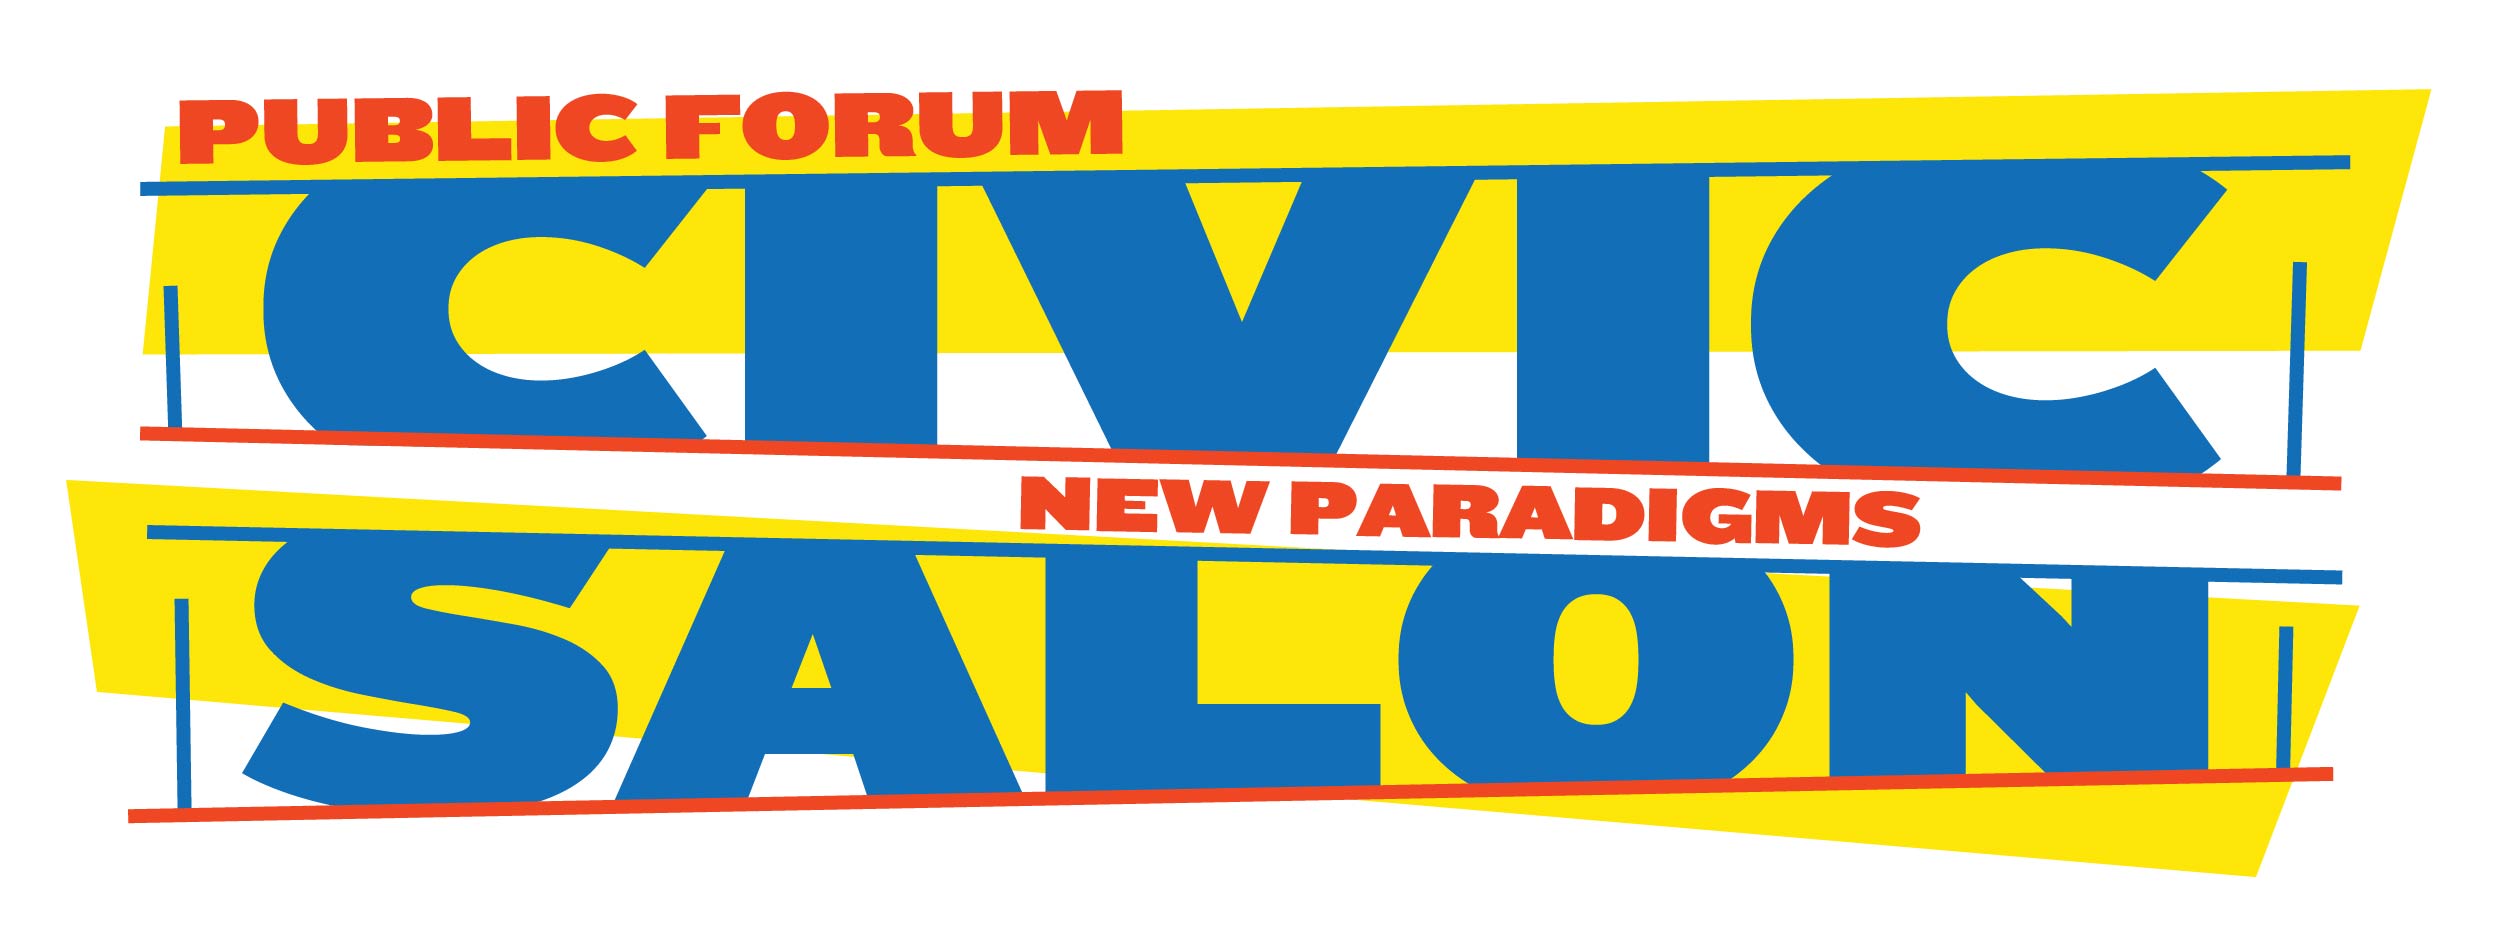 Civic Salon: NEW PARADIGMS